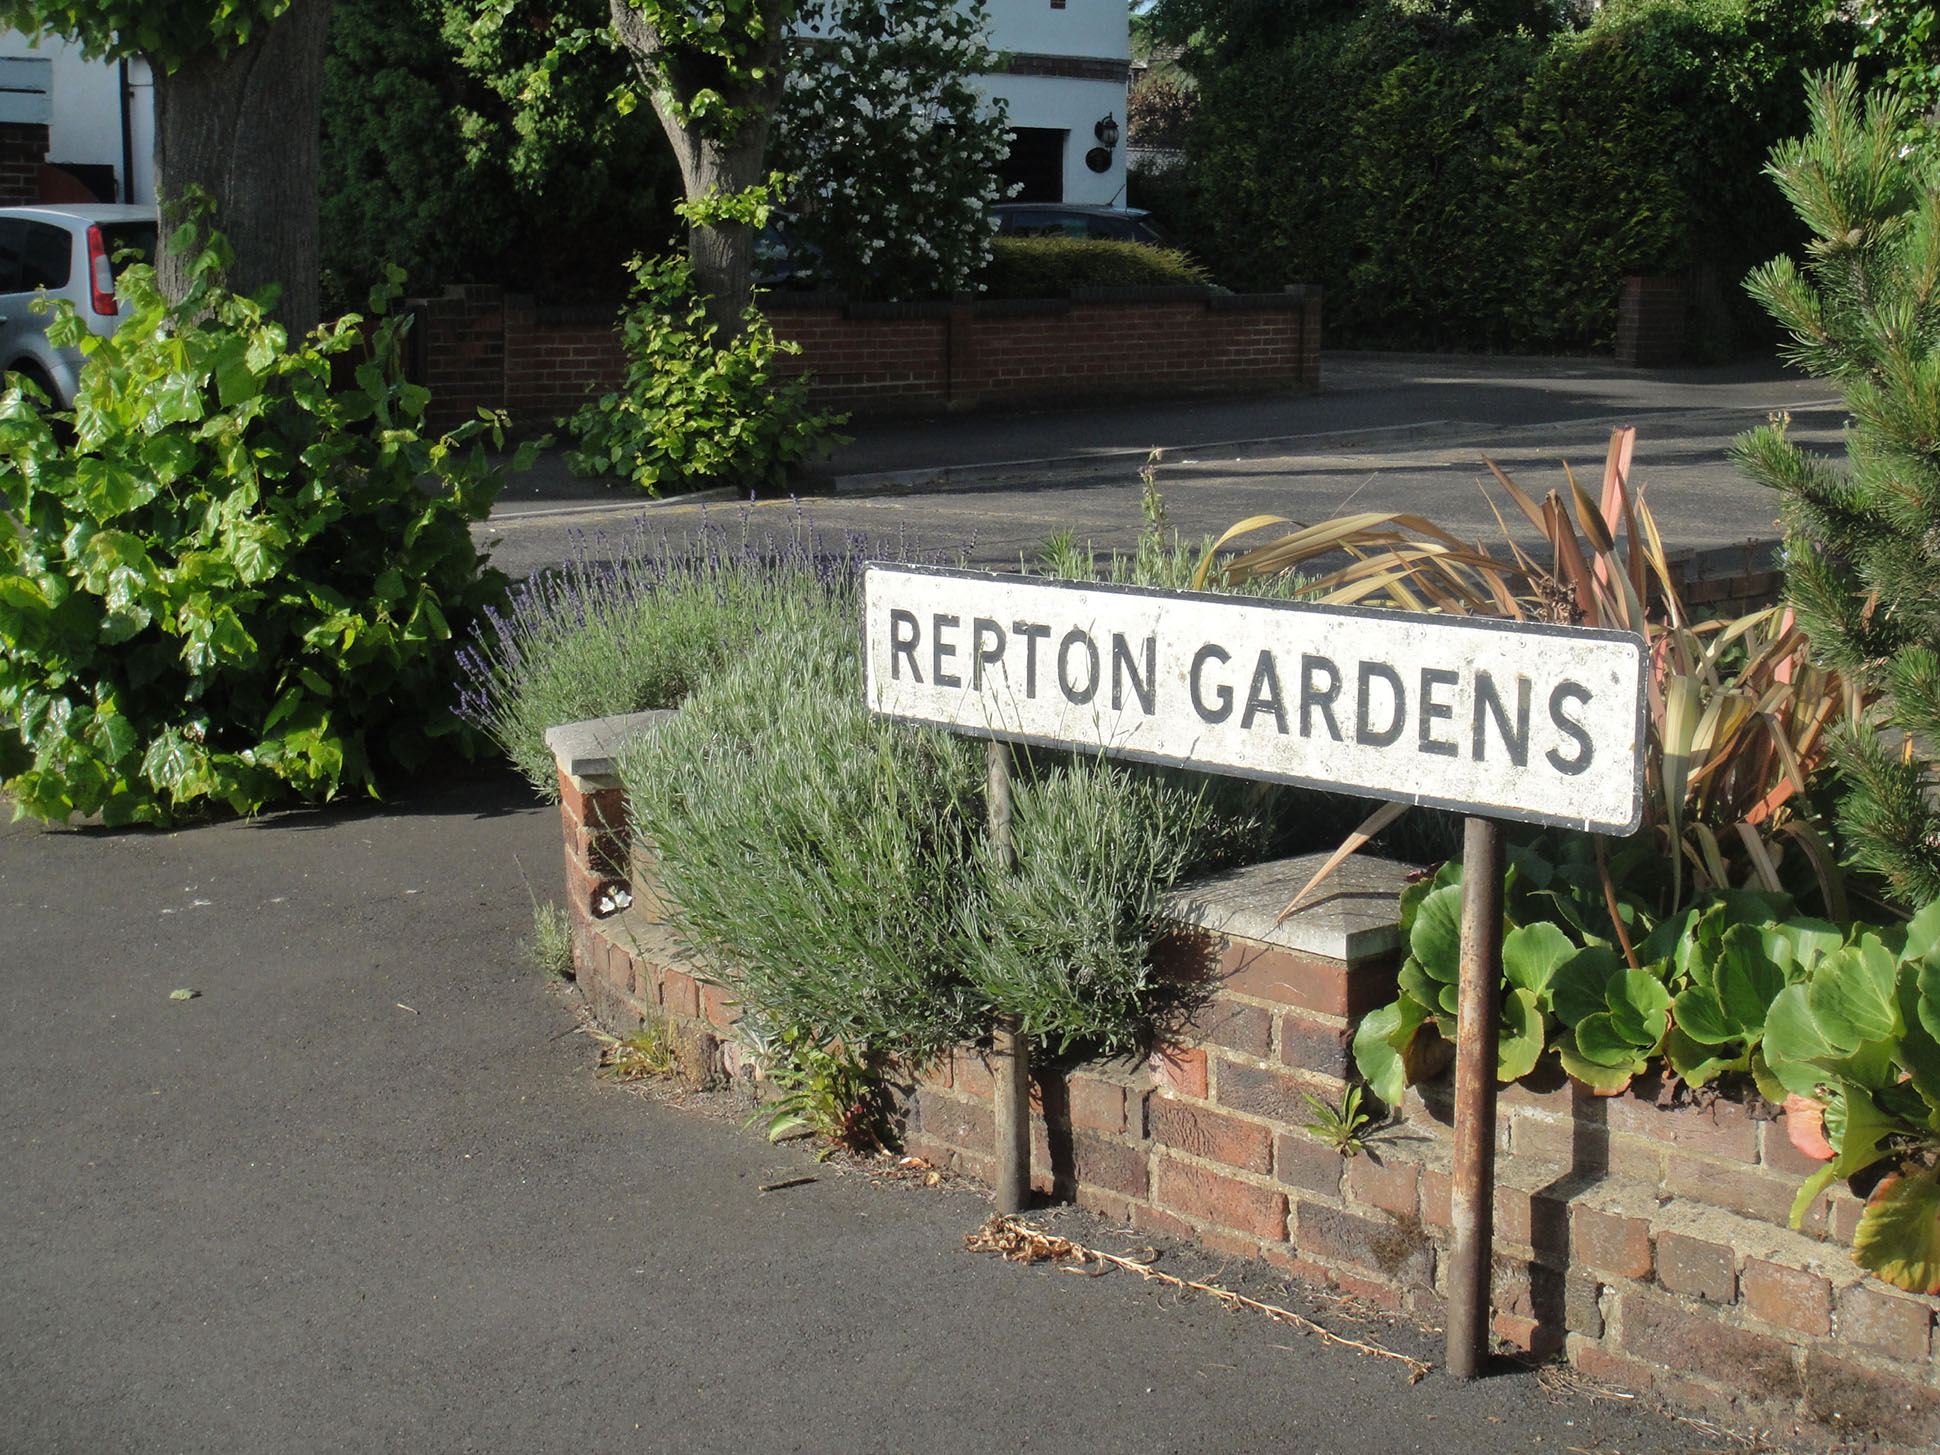 Street sign for Repton Gardens.